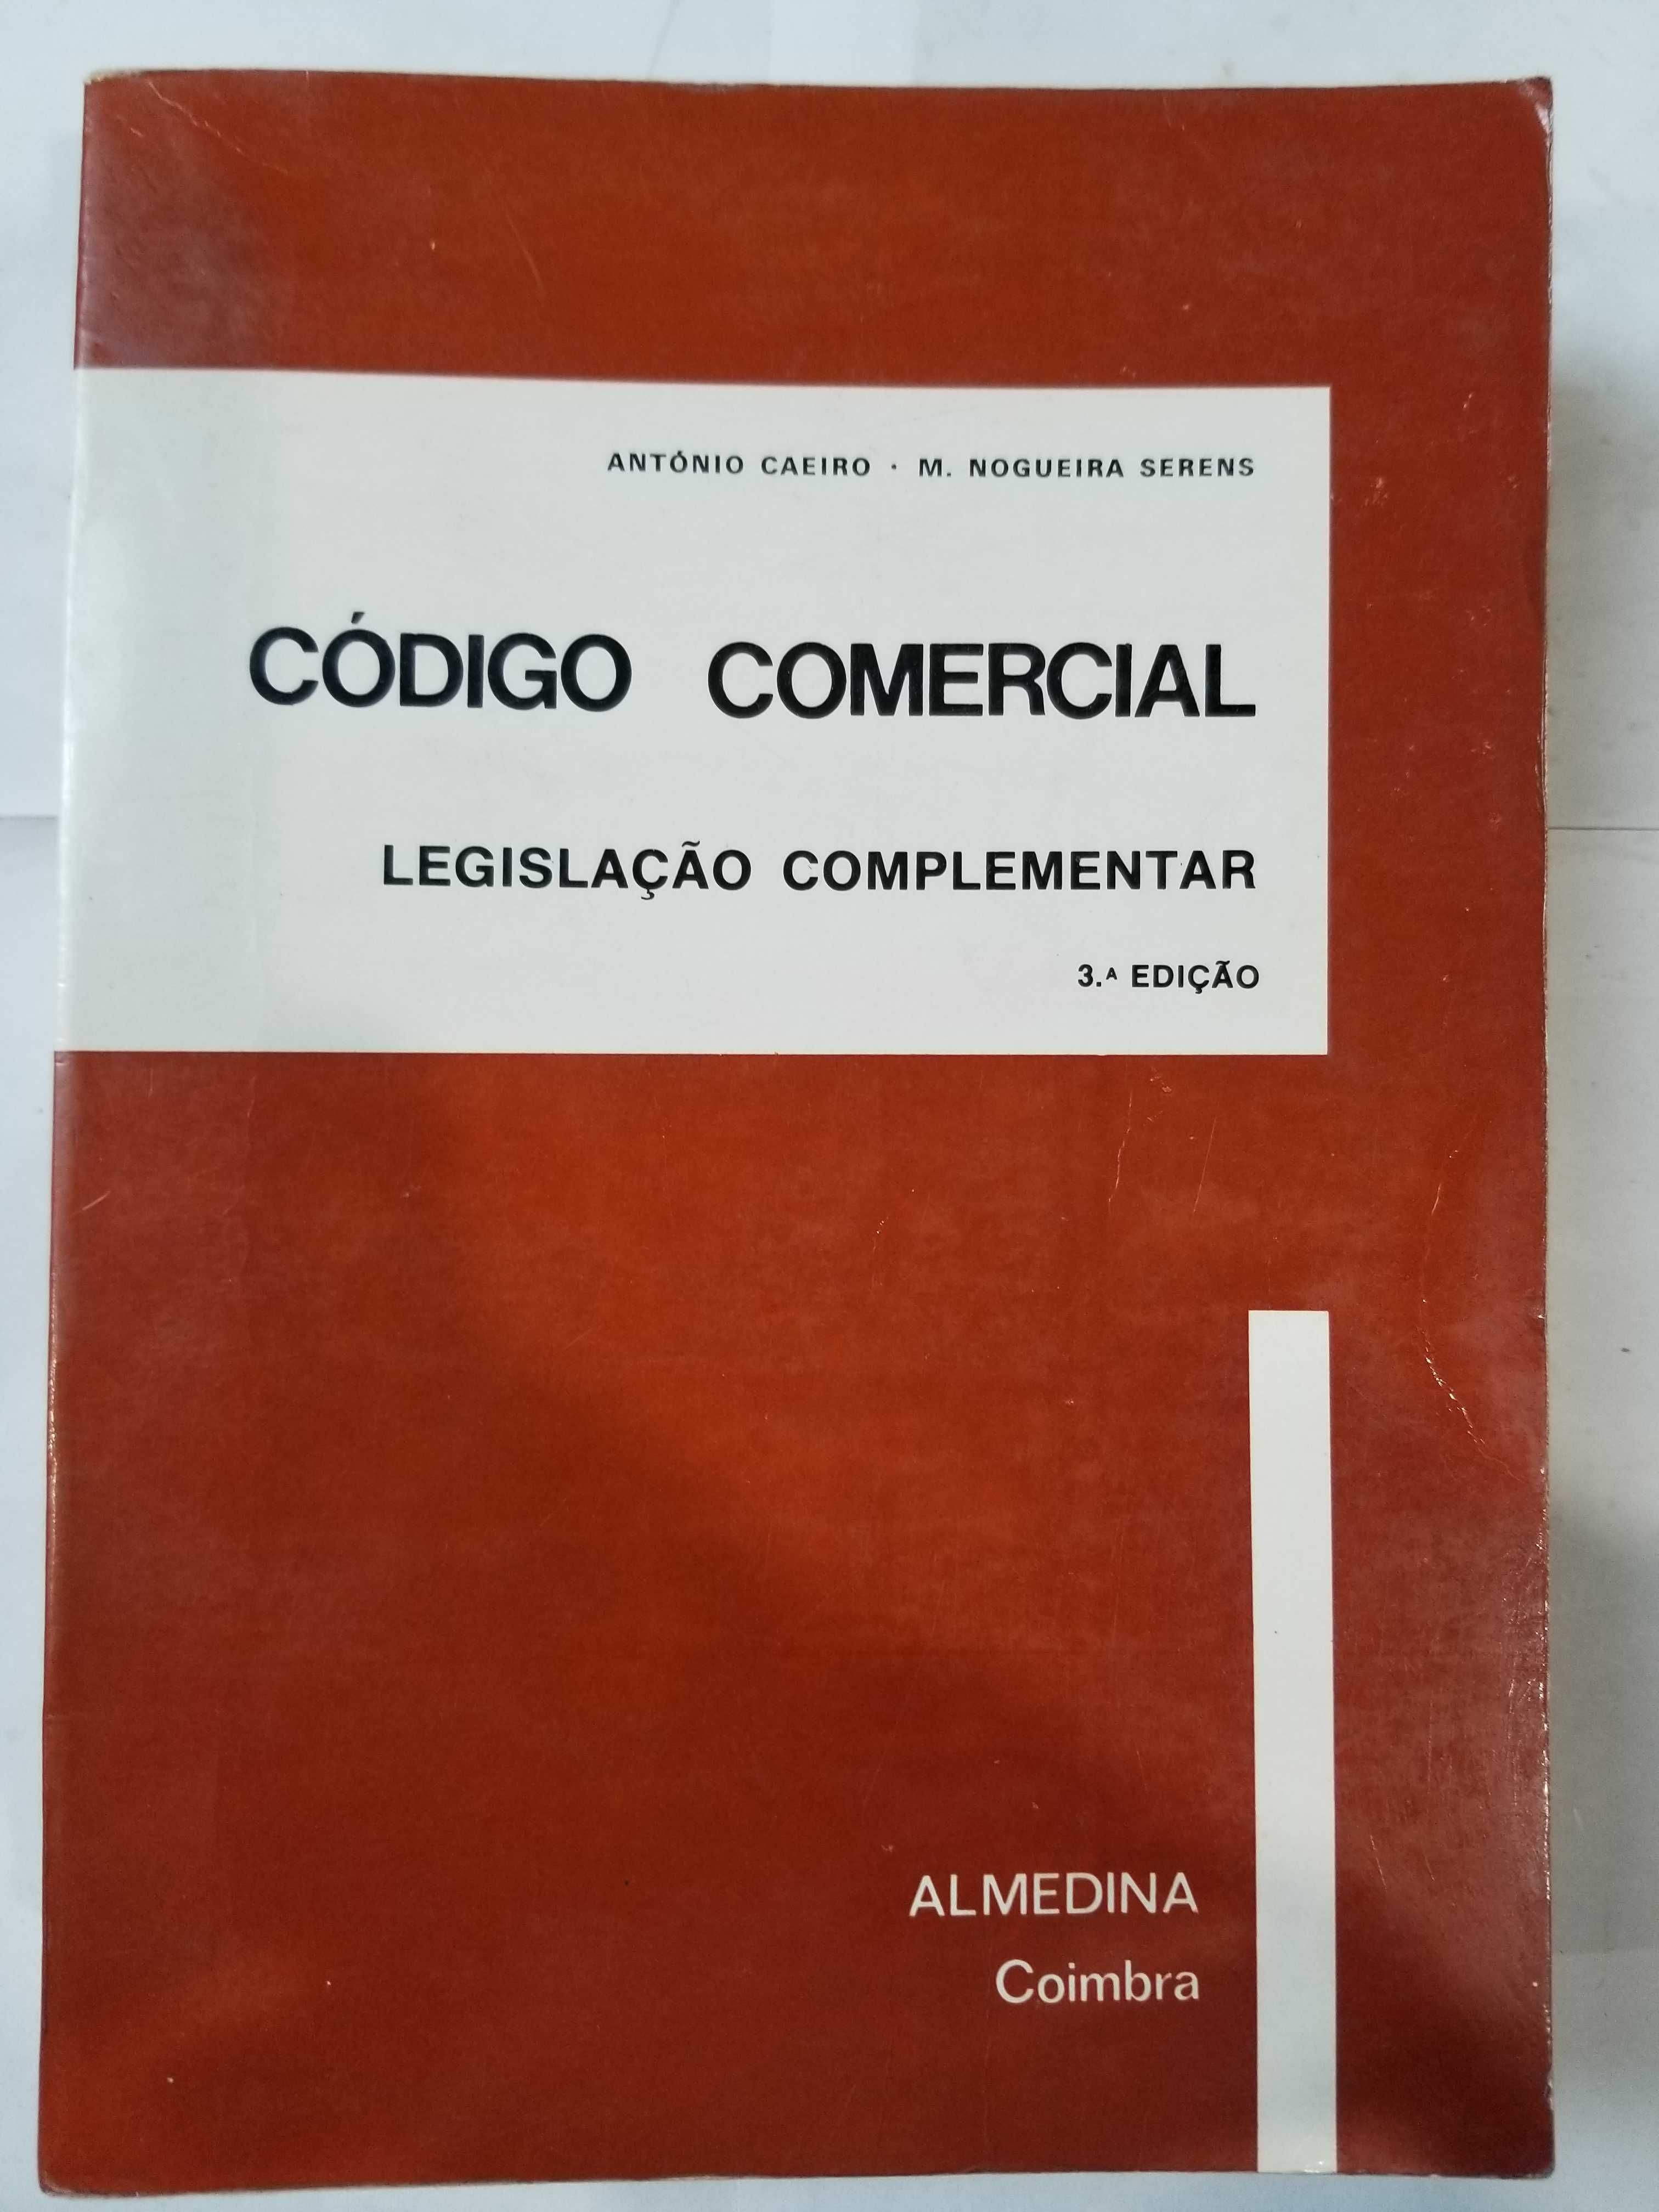 E1 - Livro - António Caeiro - Código Comercial